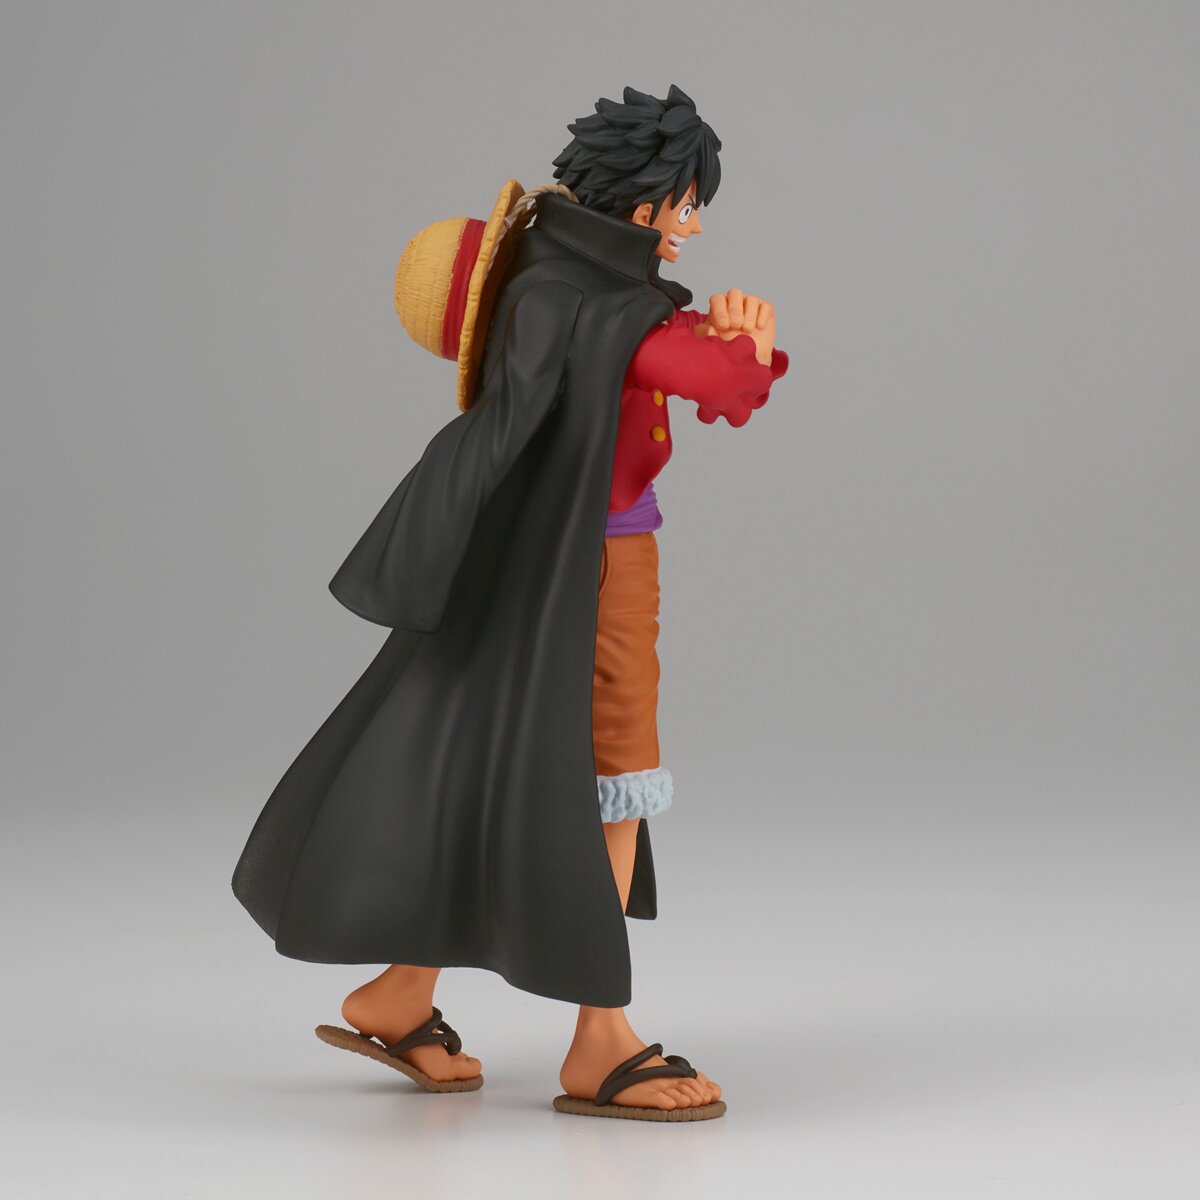 Banpresto - Monkey D. Luffy (The Shukko Figure Series), One Piece Figurine  de collection